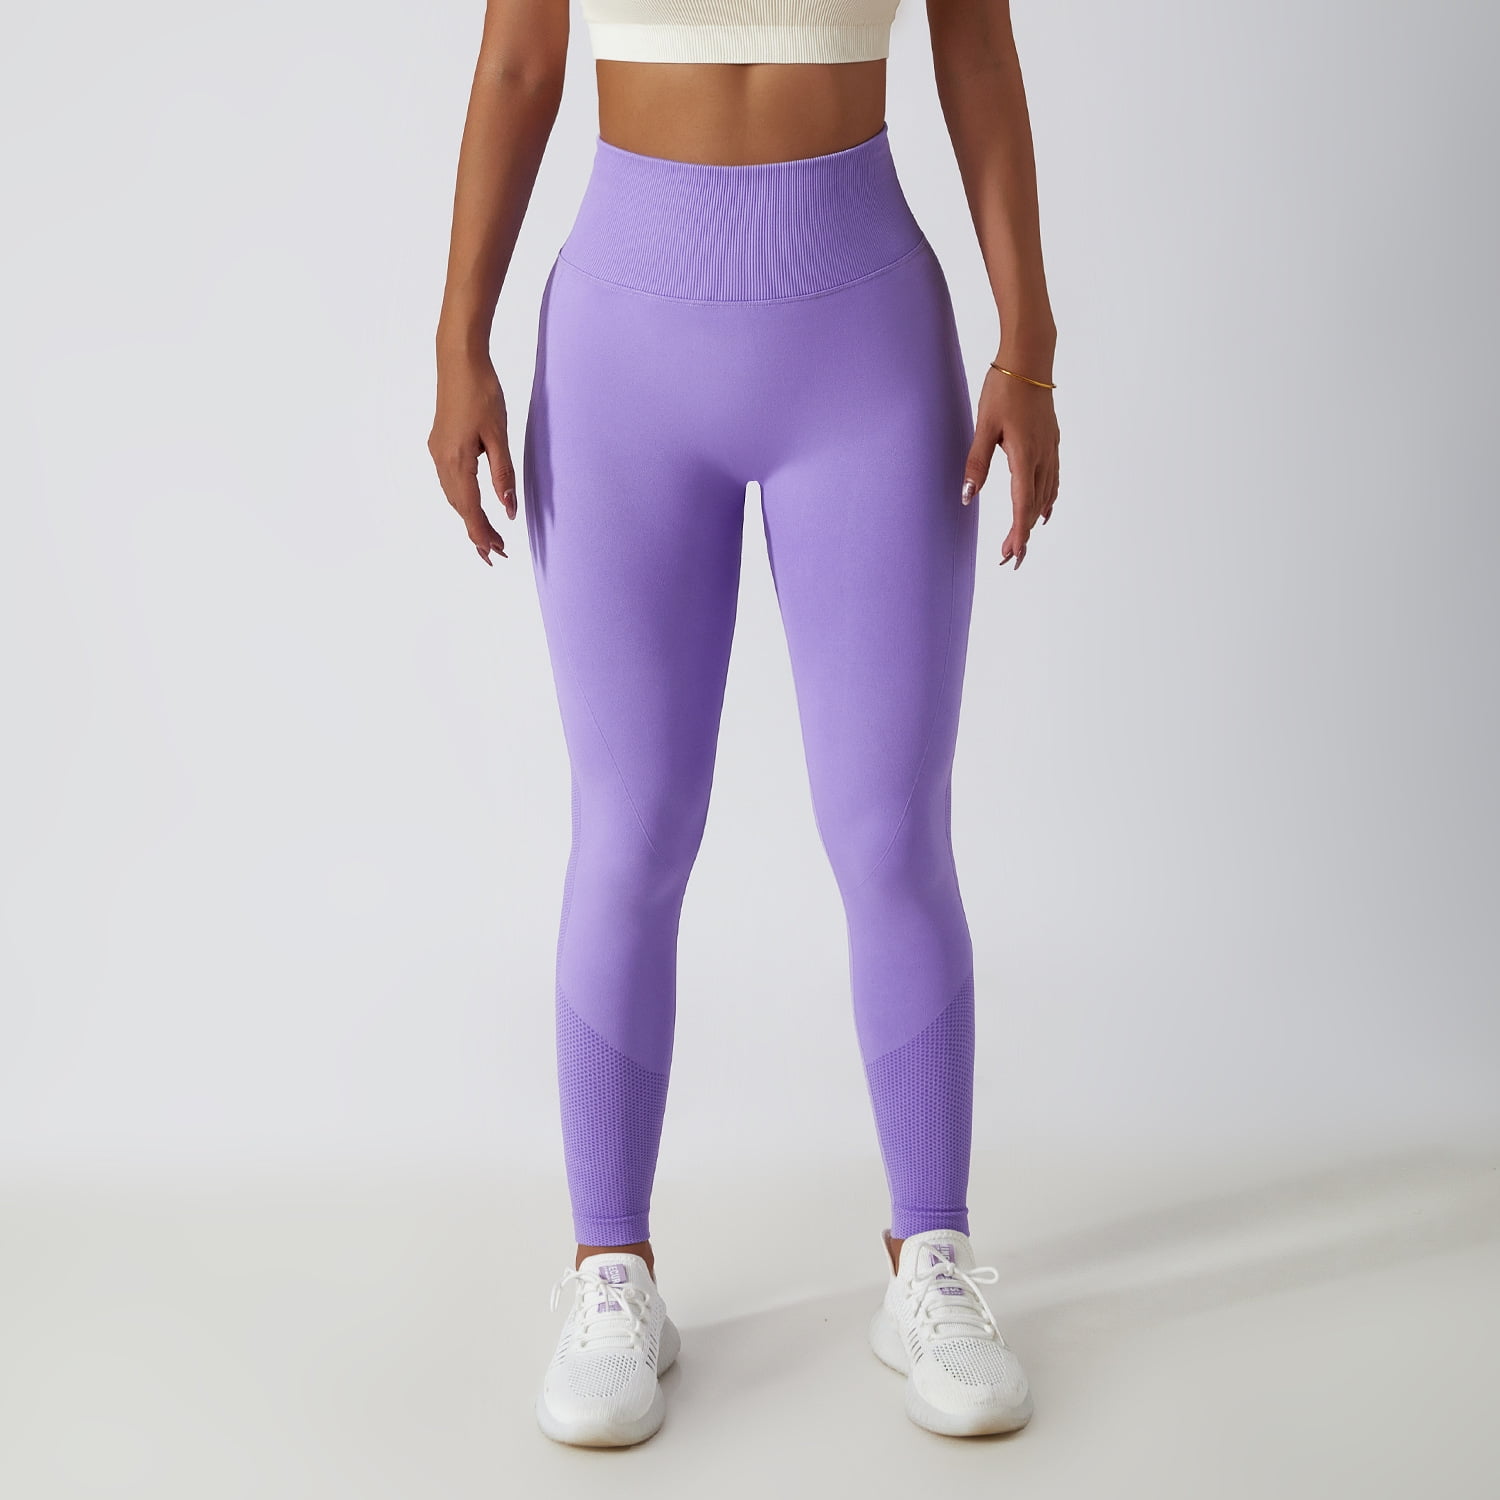 BESTSPR Sweatpants for Women Loose Legged Yoga Pants High Waist Lean Casual  Sports Pants Stretch Training Fitness Pants S-2XL 